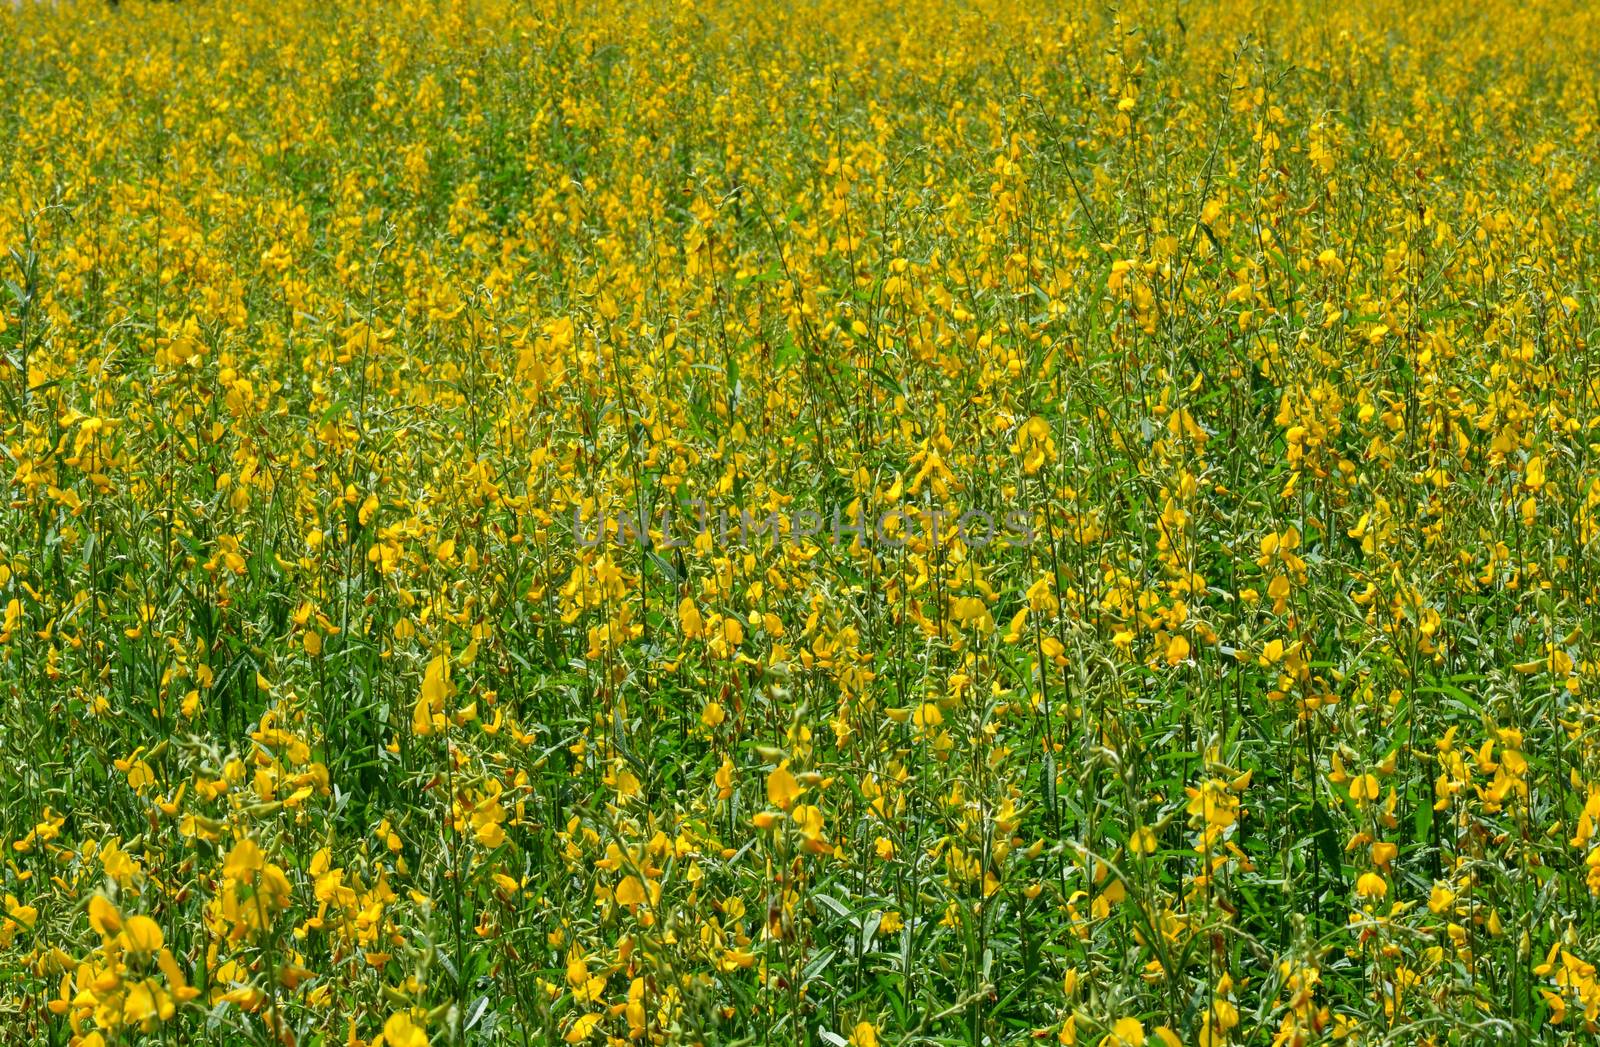 Farm Sunn Hemp flowers, Indian hemp flower field by ideation90